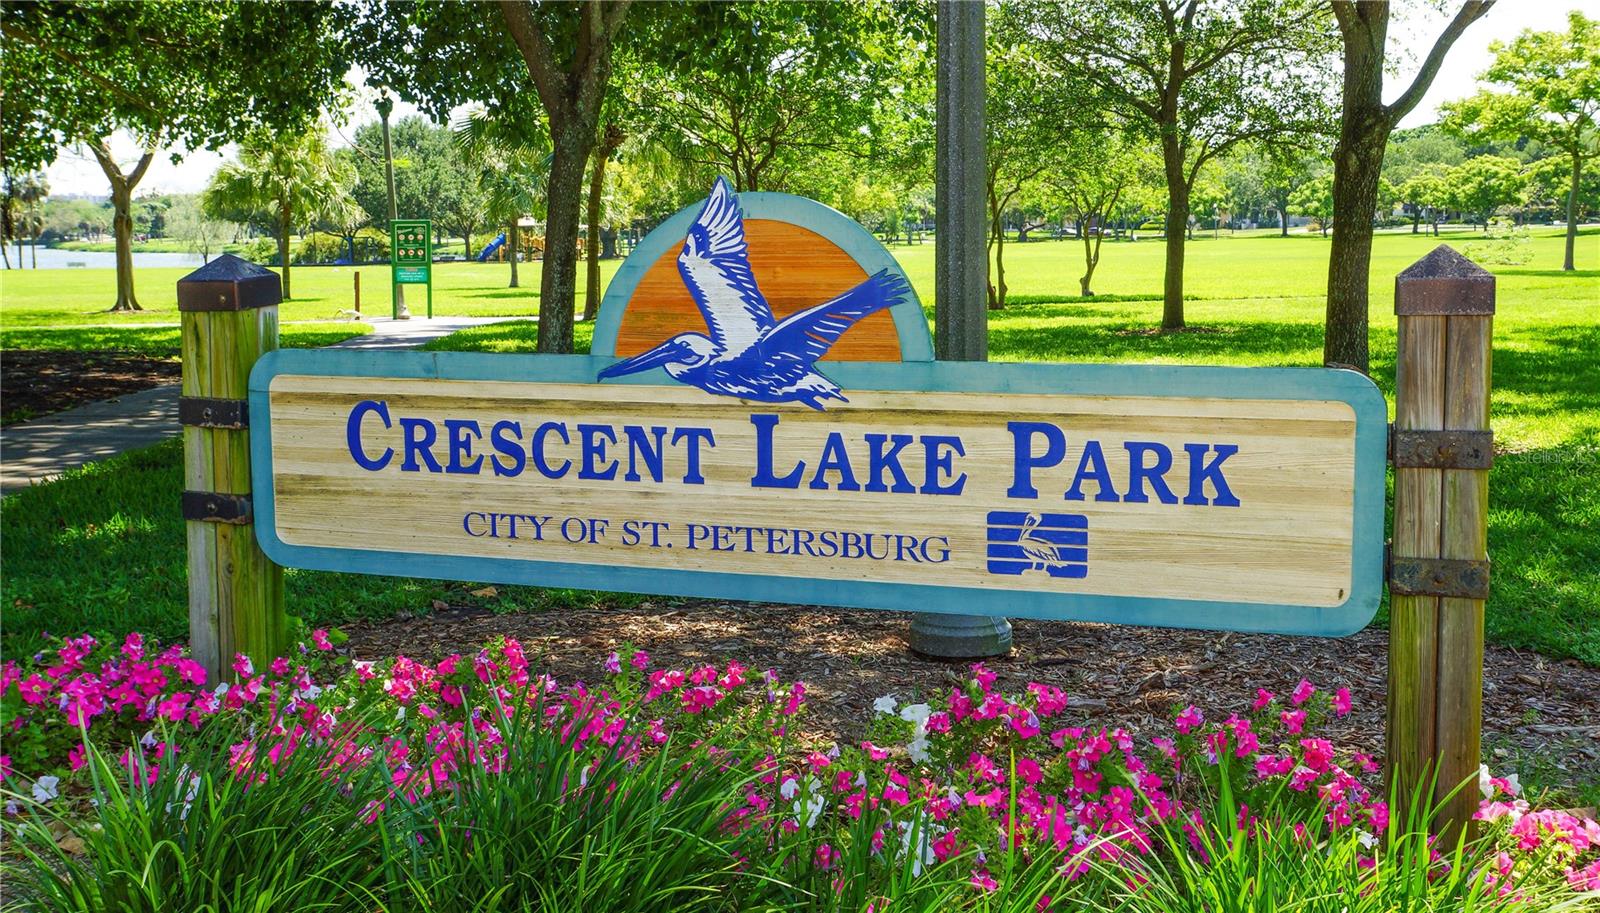 Crescent Lake Park!